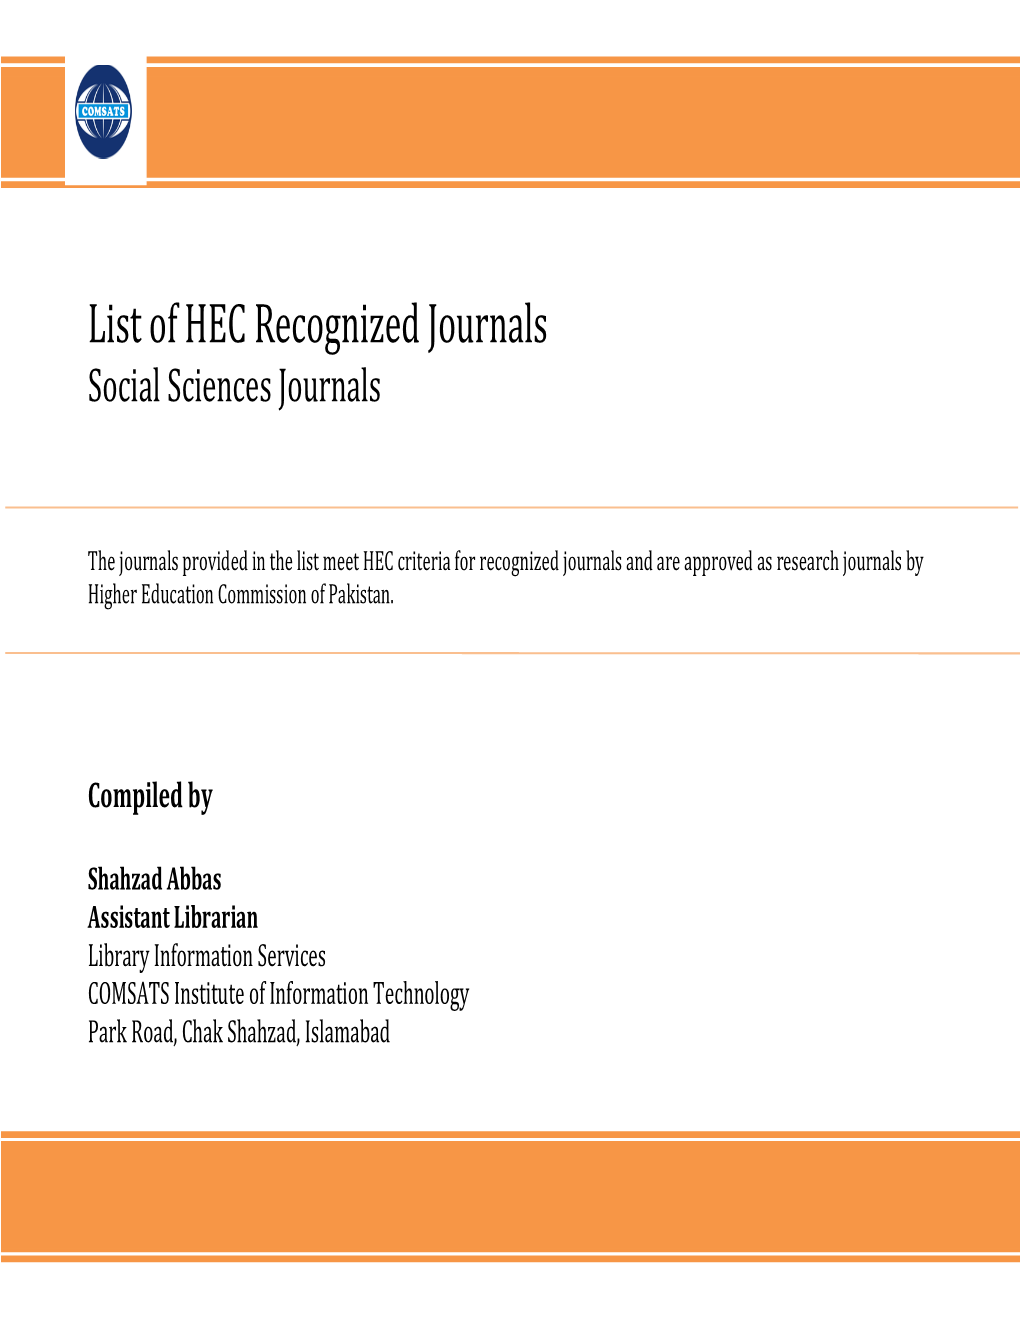 List of HEC Recognized Journals Social Sciences Journals